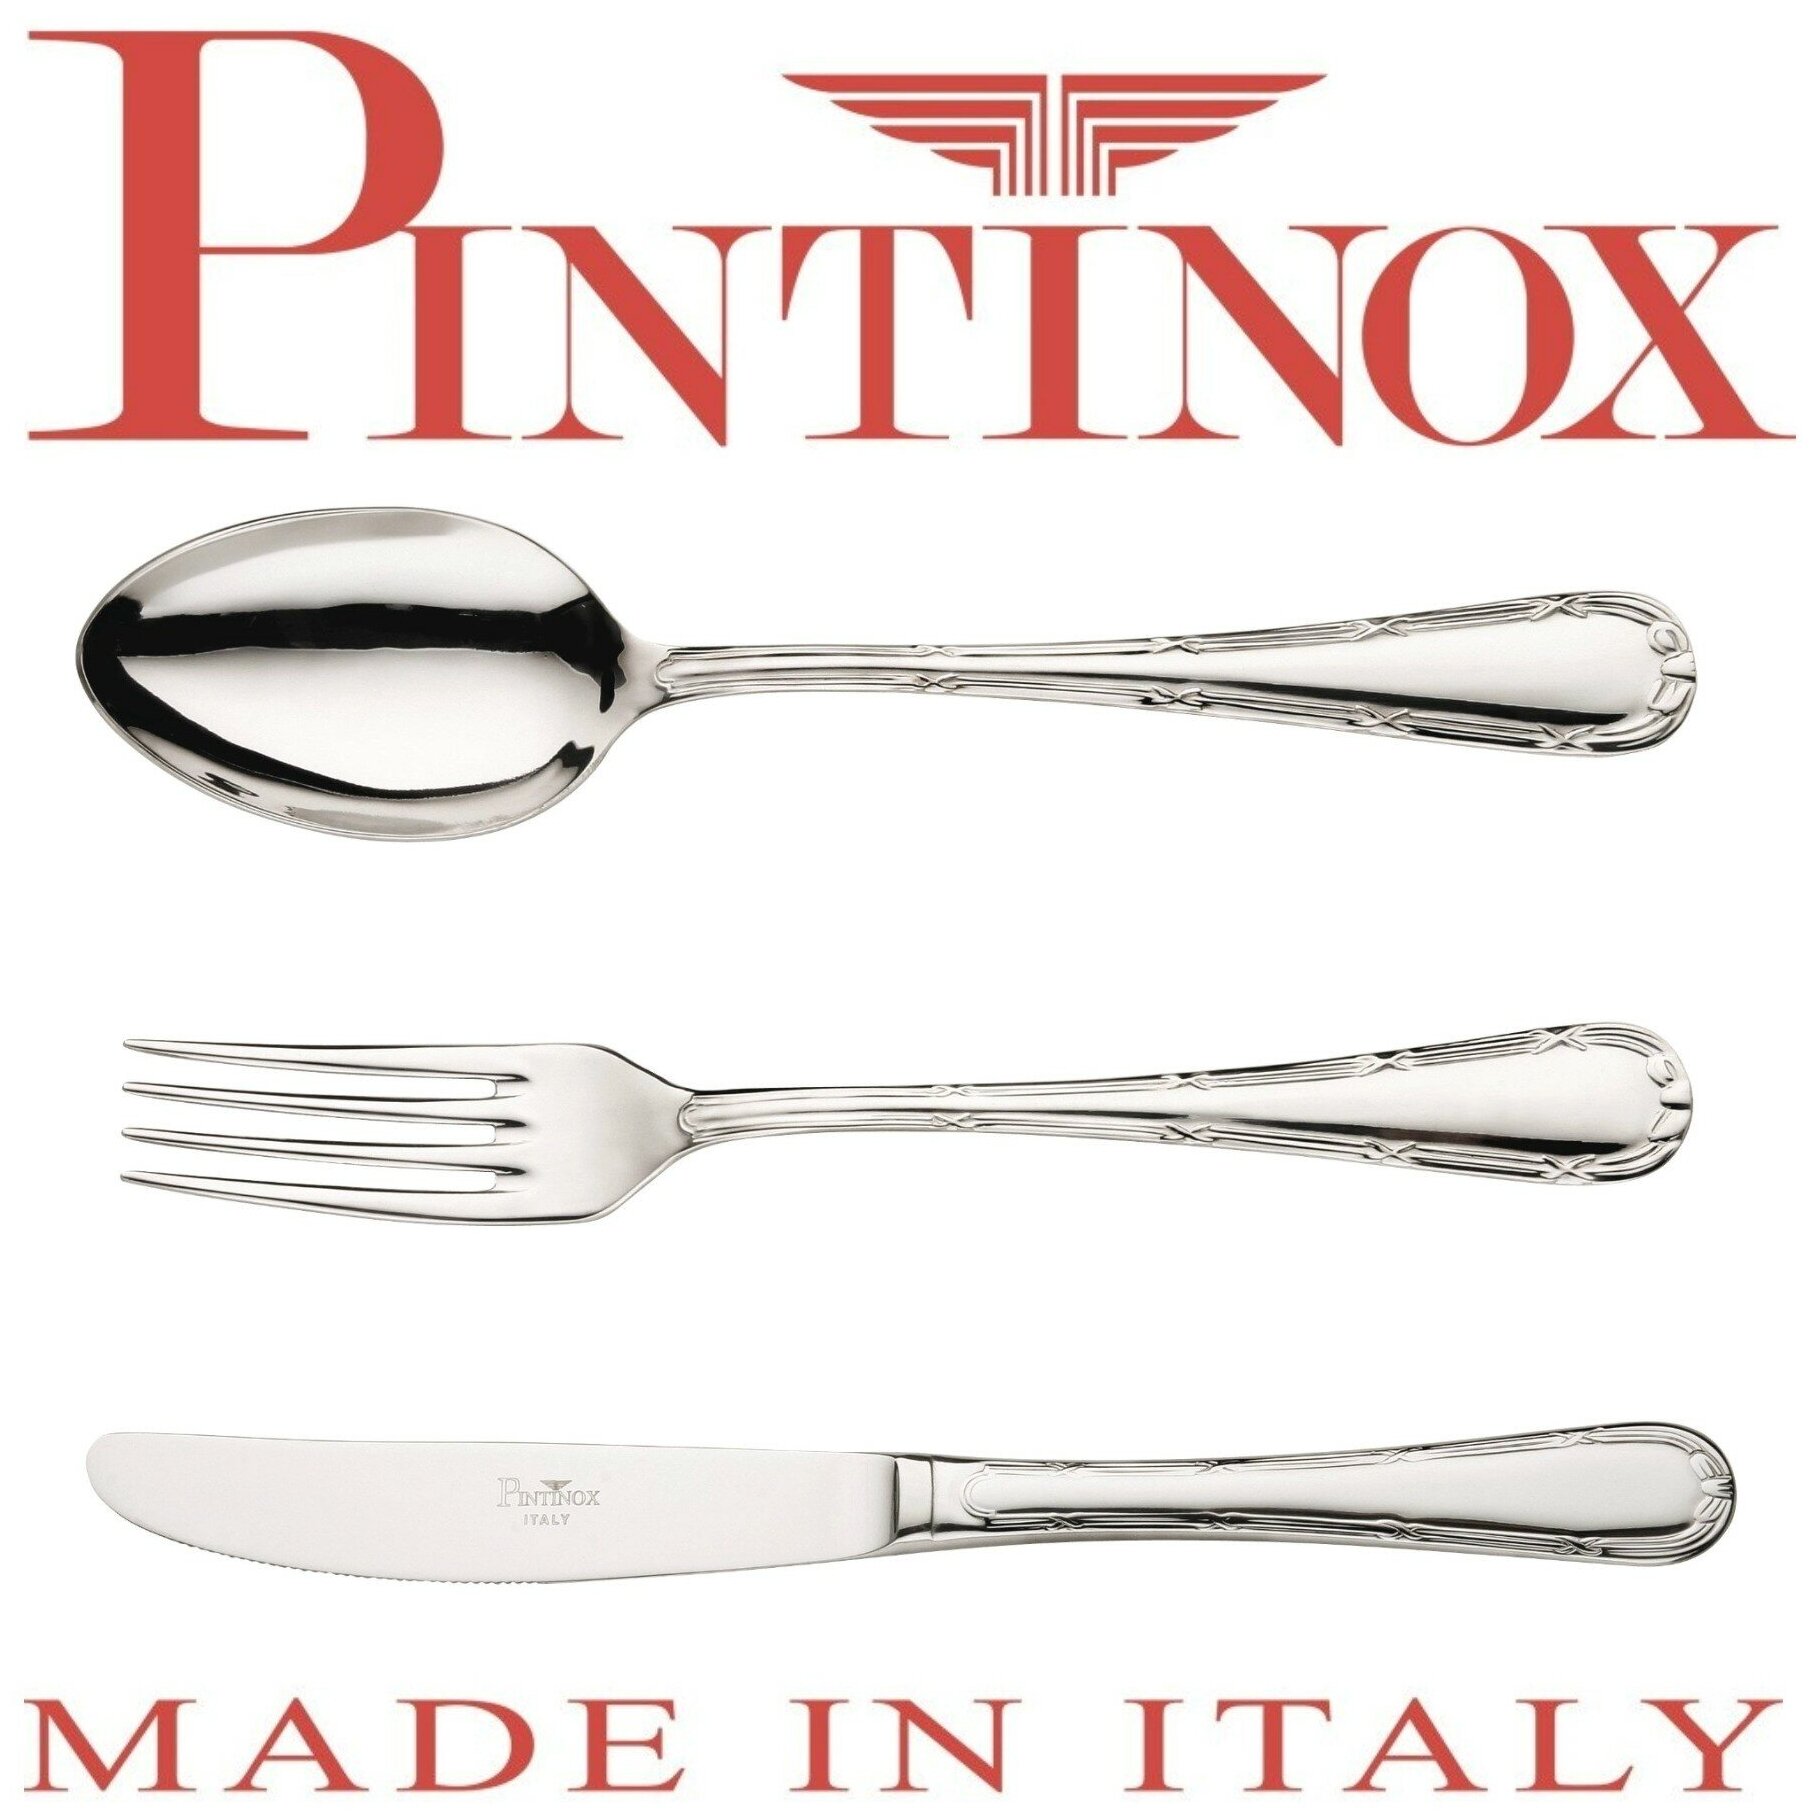 Набор столовых приборов Pintinox Filet в коробке, 3 предмета на 1 персону, Pinti Inox (Италия)